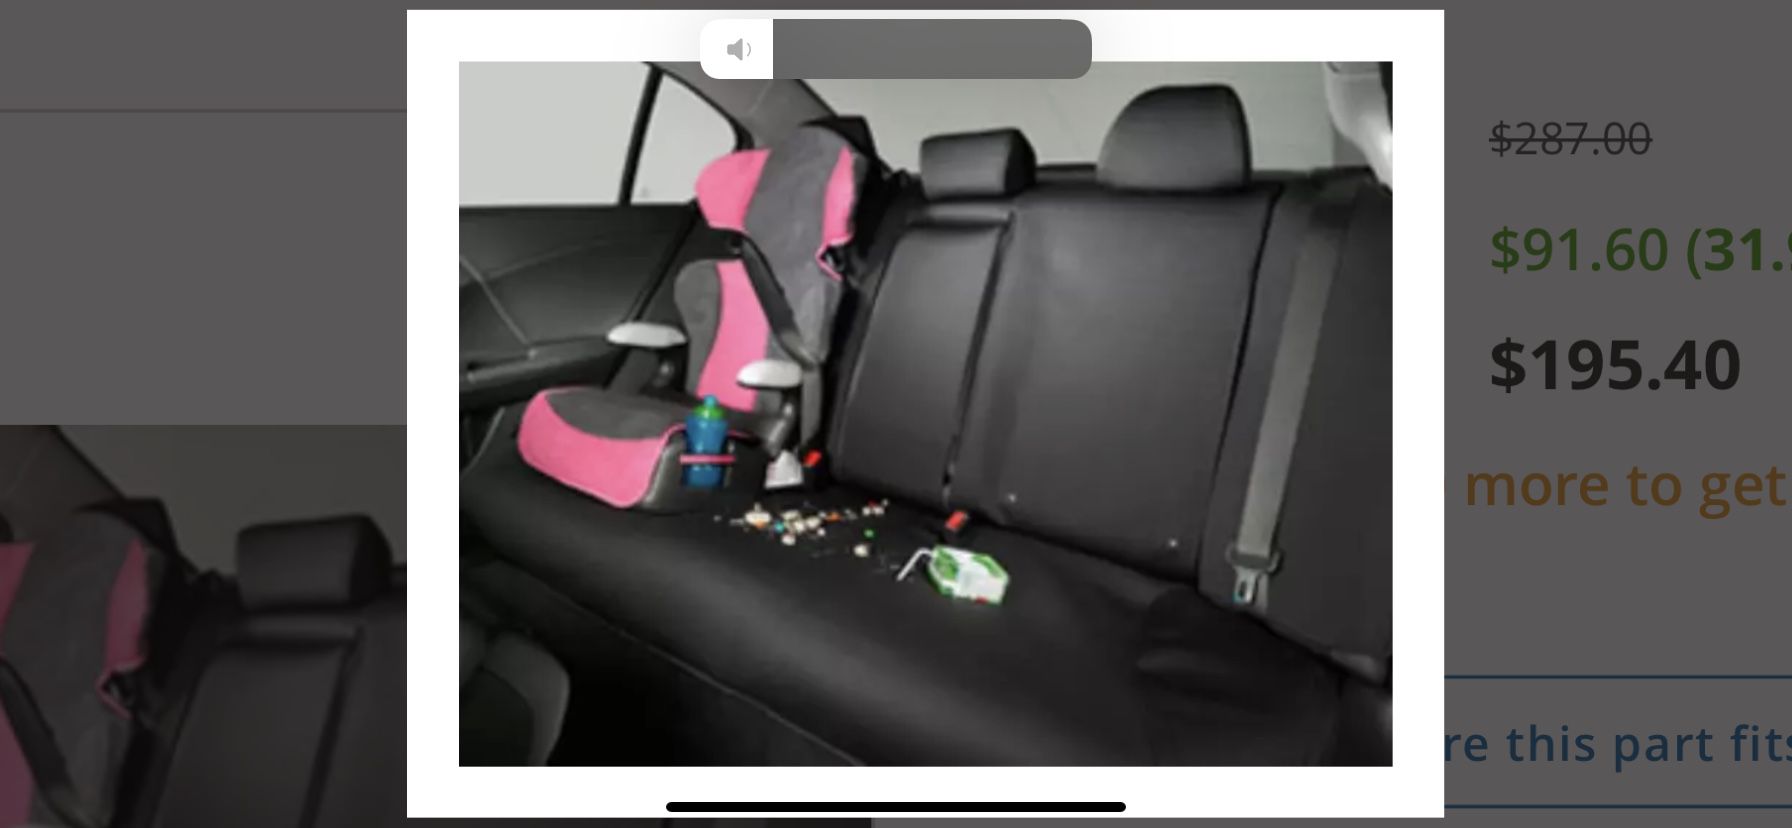 Seat cover Rear- Honda And OEM Floor Mats